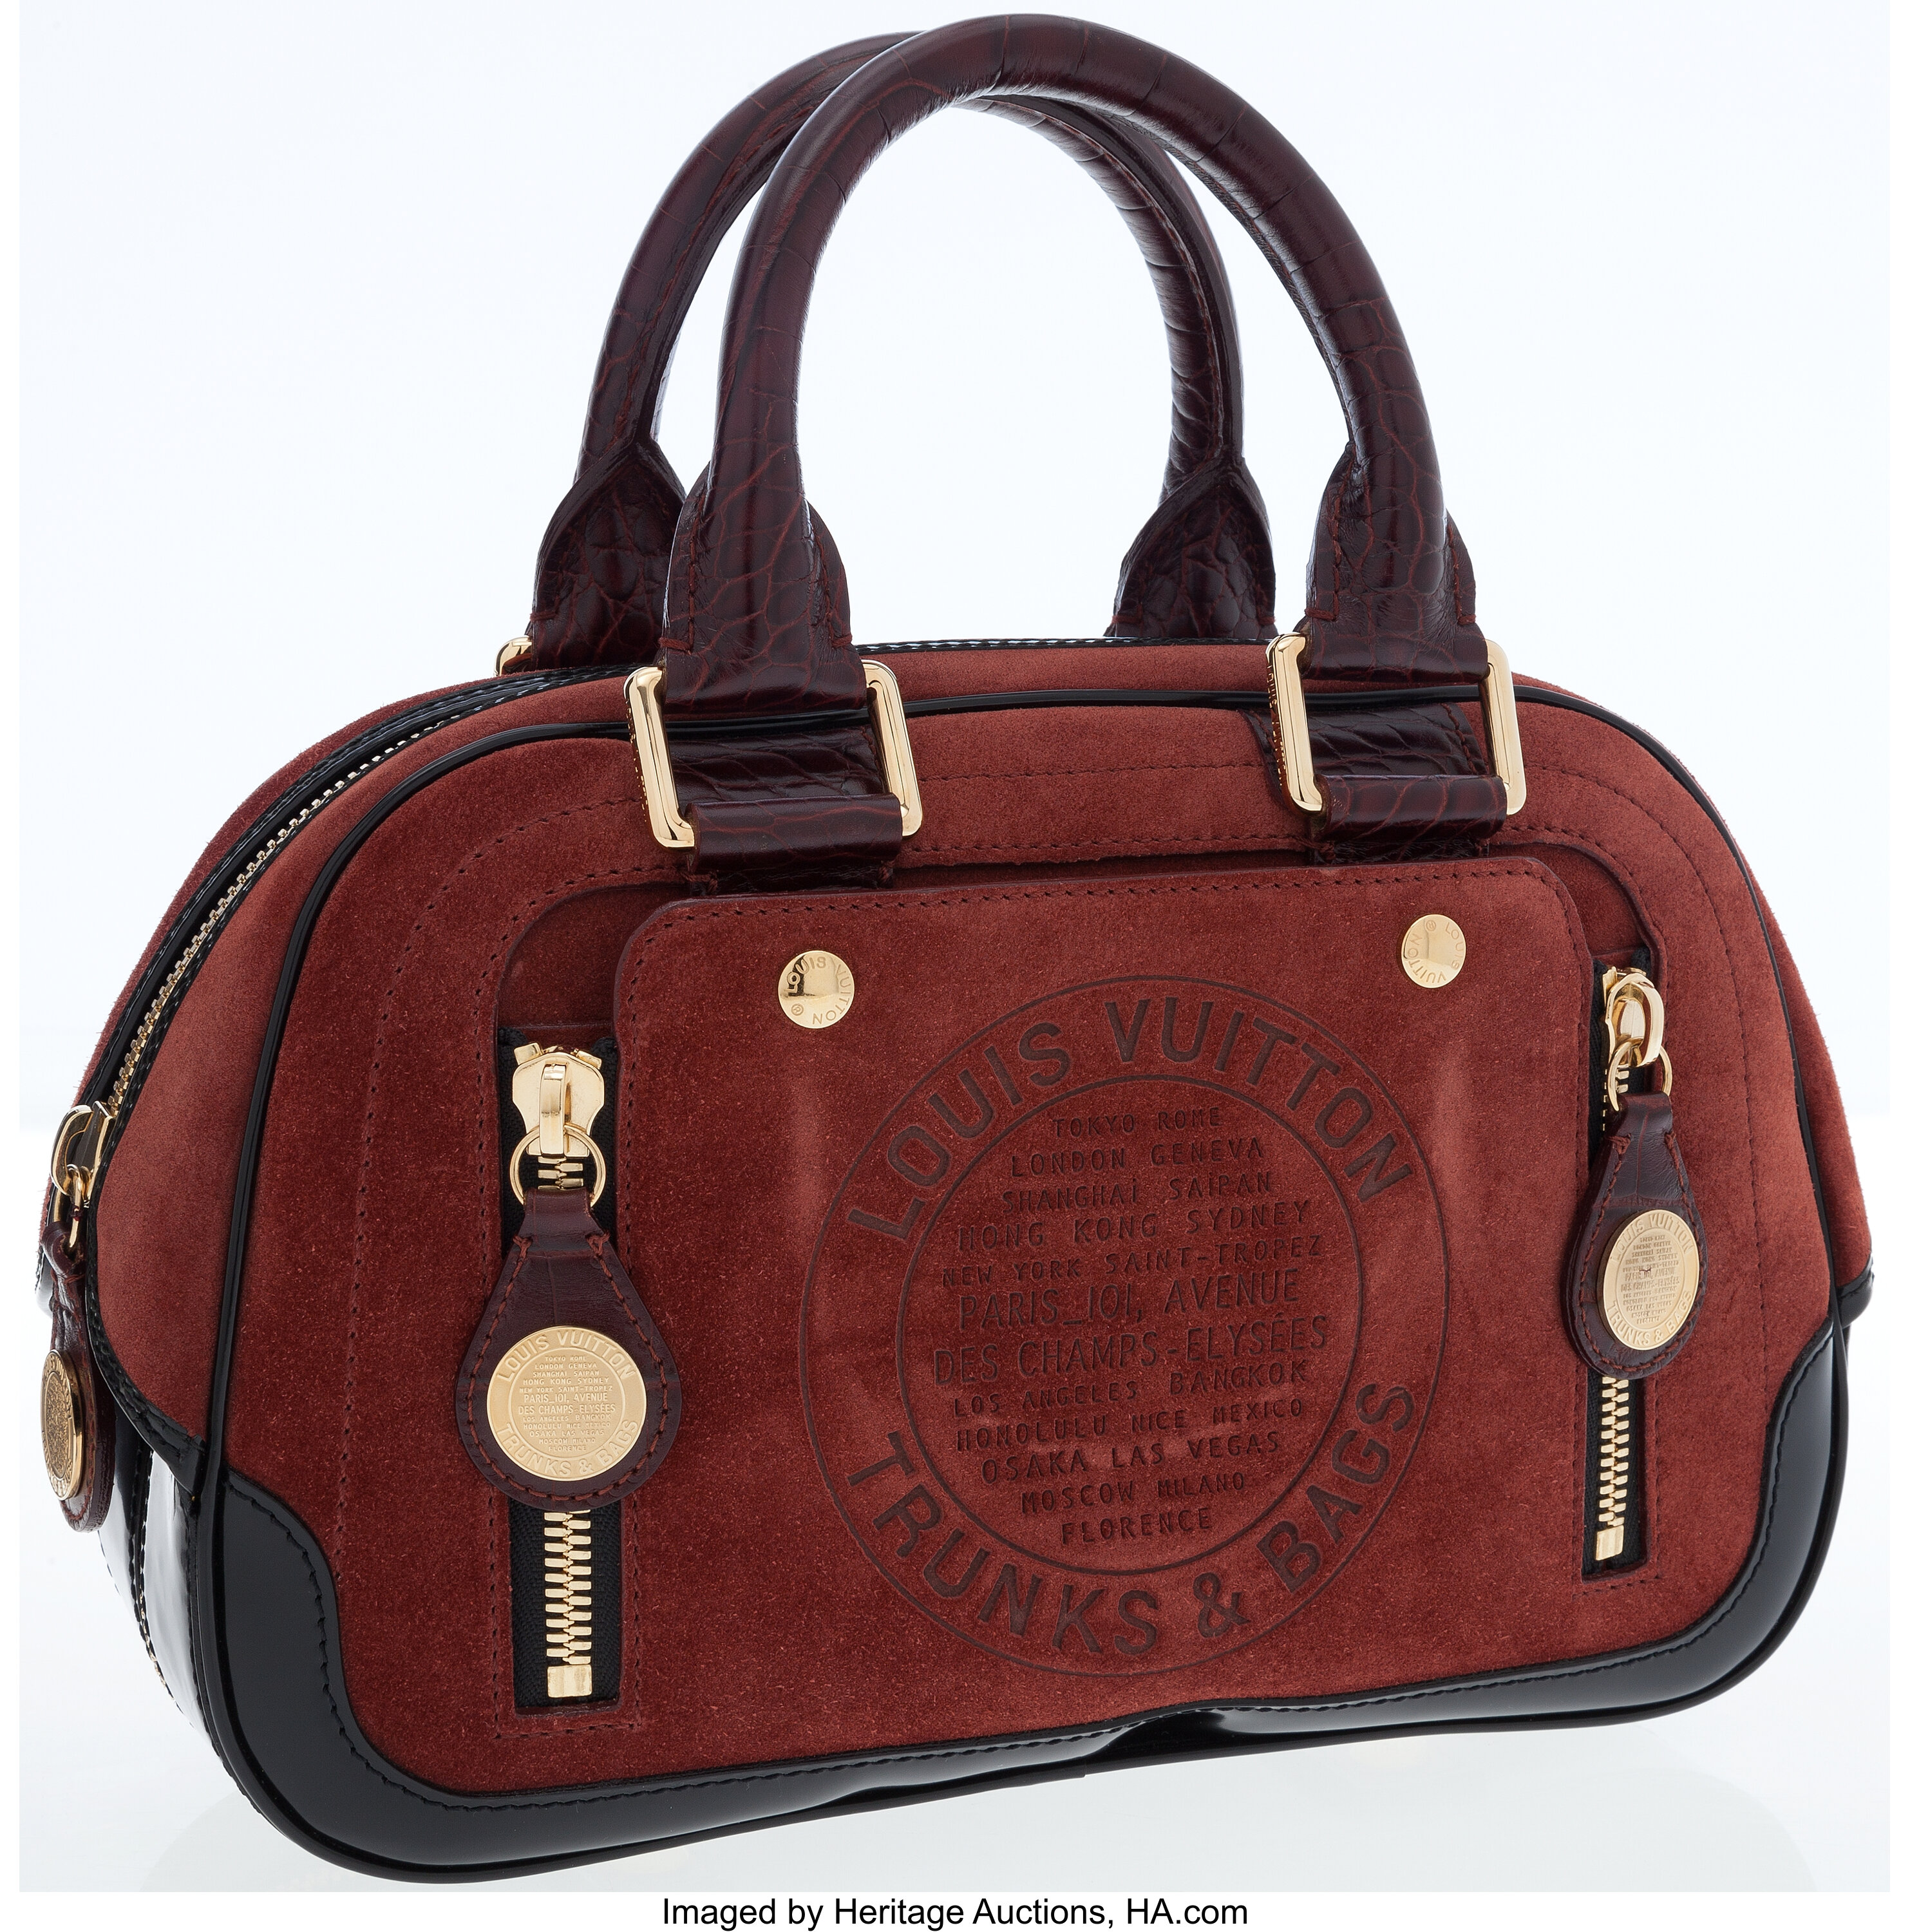 Sold at Auction: Satchel Handbag Marked, Louis Vuitton.